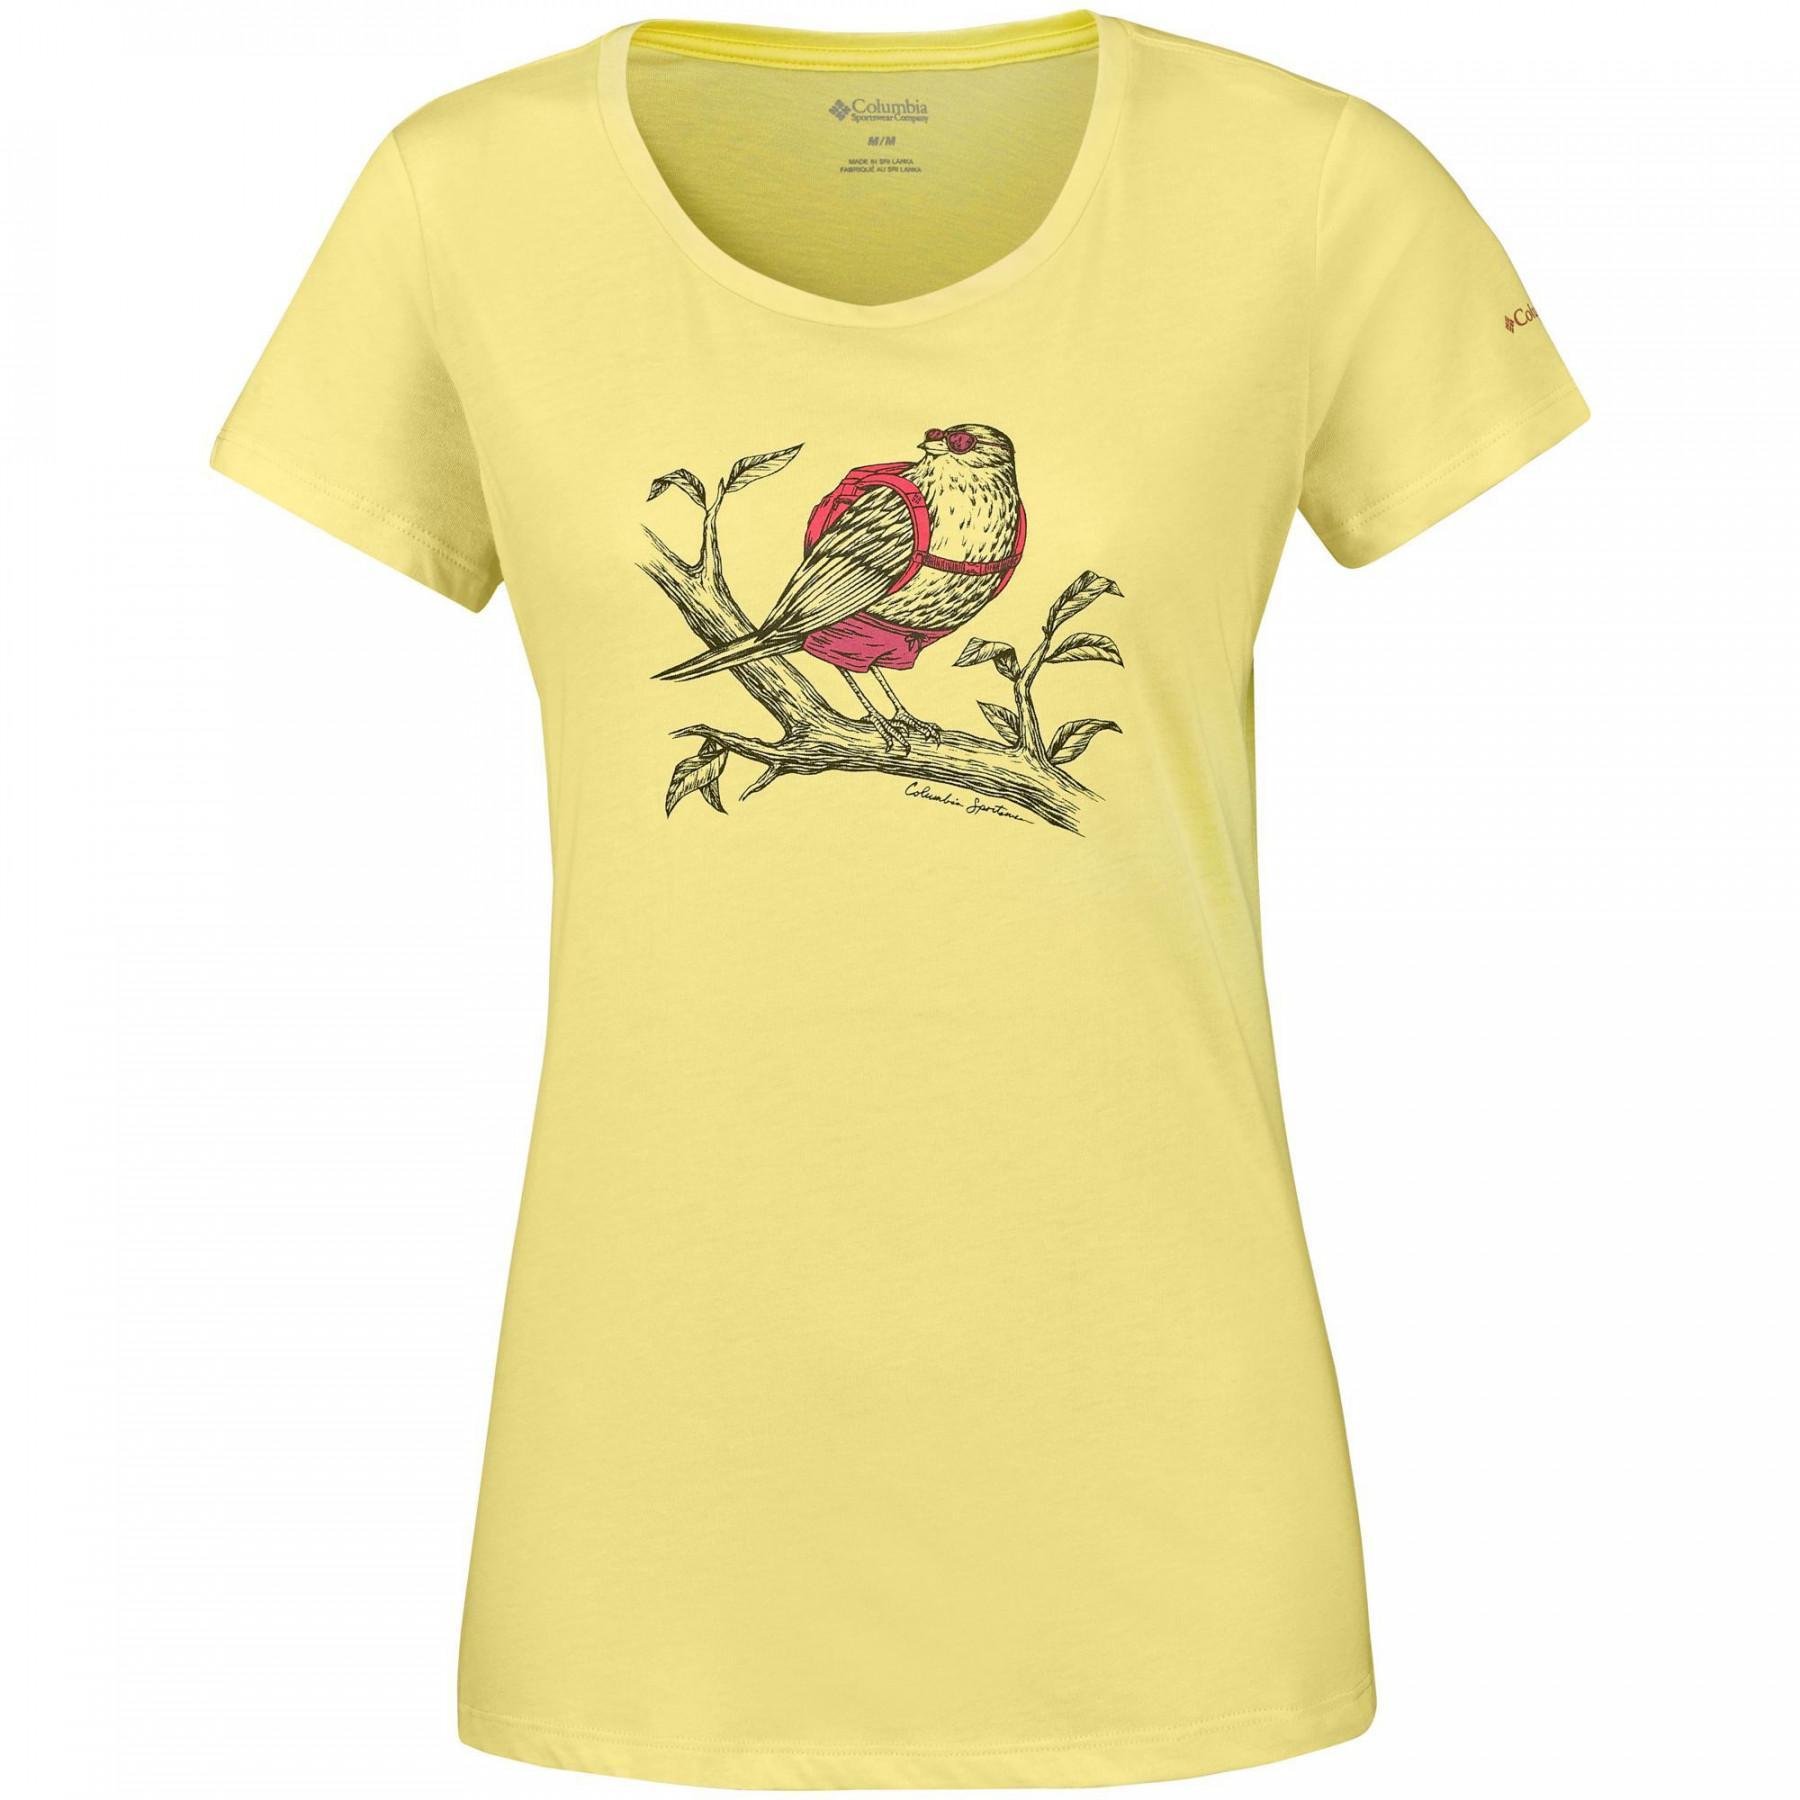 T-shirt femme Columbia Birdy Buddy